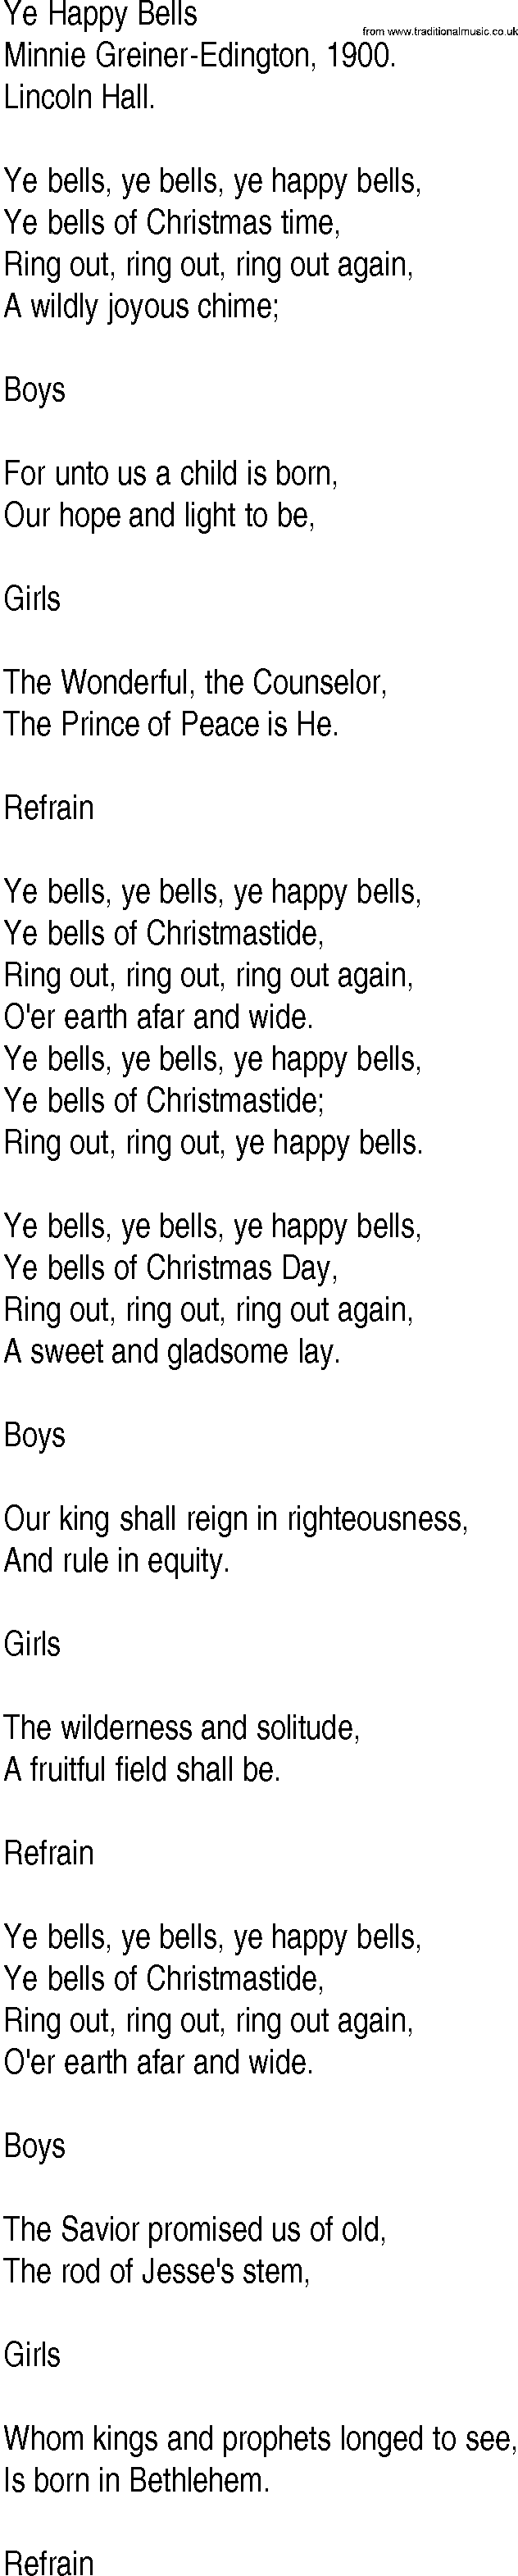 Hymn and Gospel Song: Ye Happy Bells by Minnie GreinerEdington lyrics